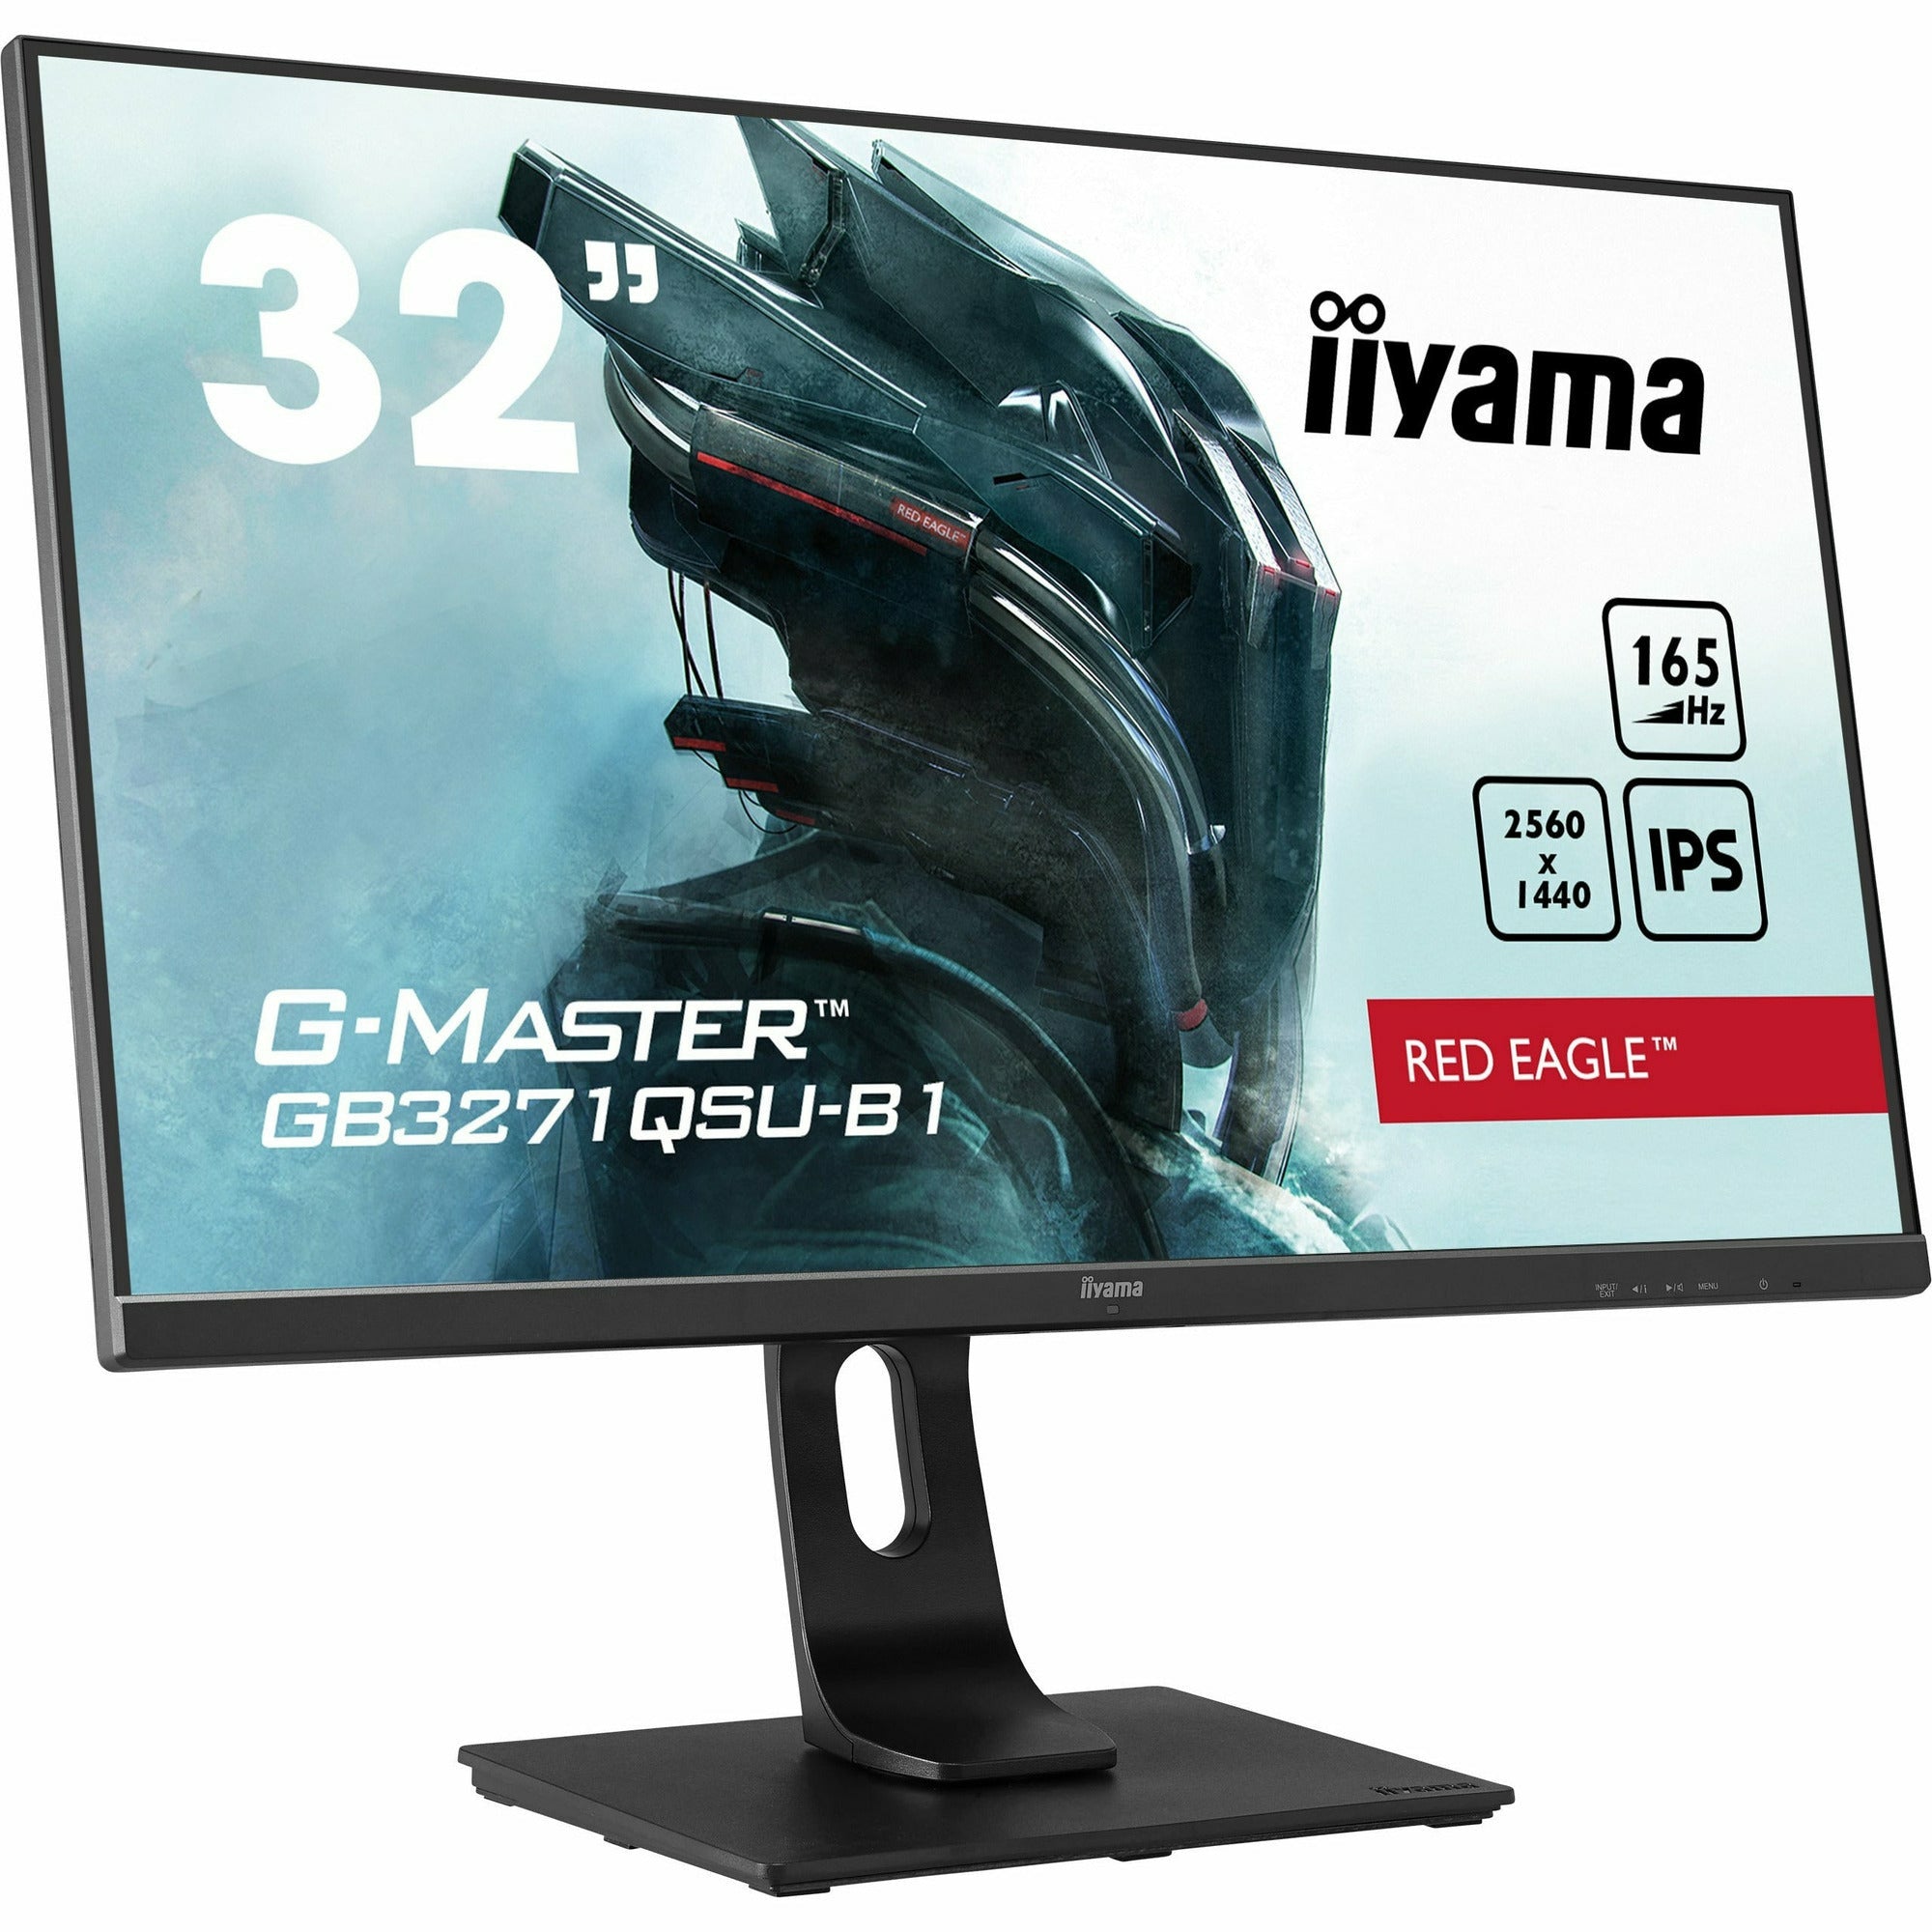 iiyama G-Master GB3271QSU-B1 32" 165Hz IPS Display